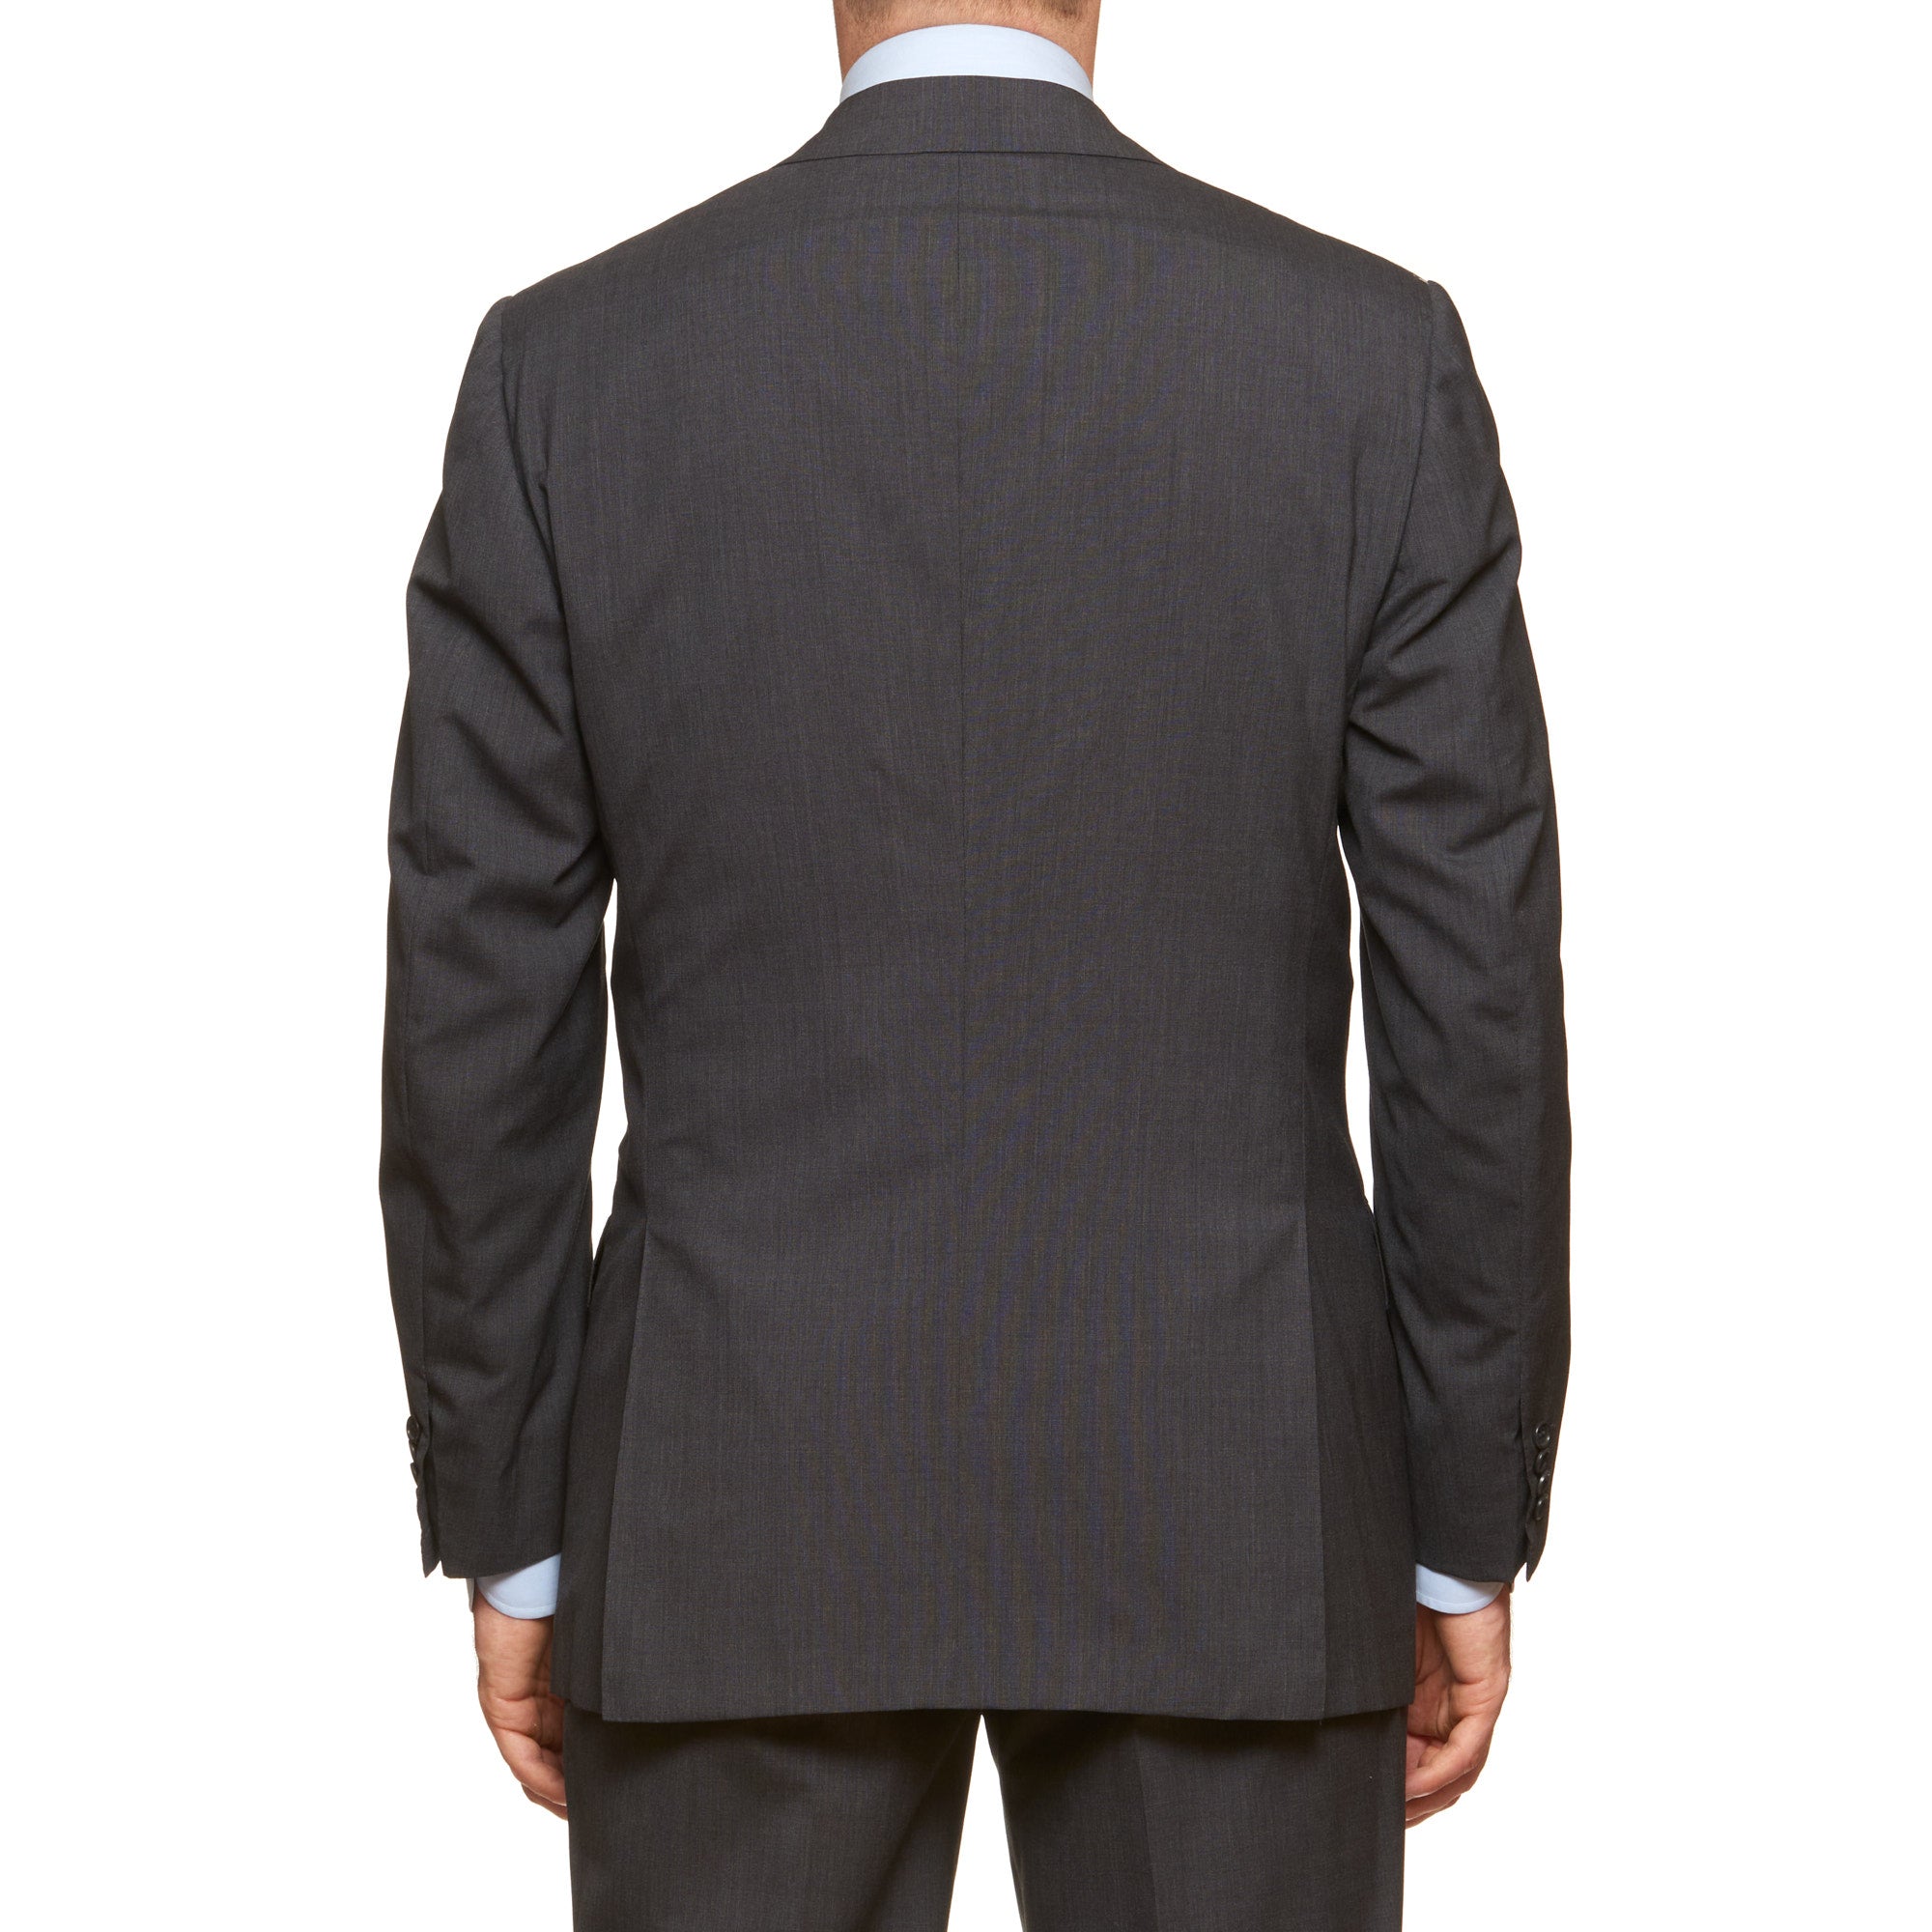 KITON "Diamante Blu" Handmade Charcoal Gray Super 150's Suit EU 50 NEW US 40 KITON